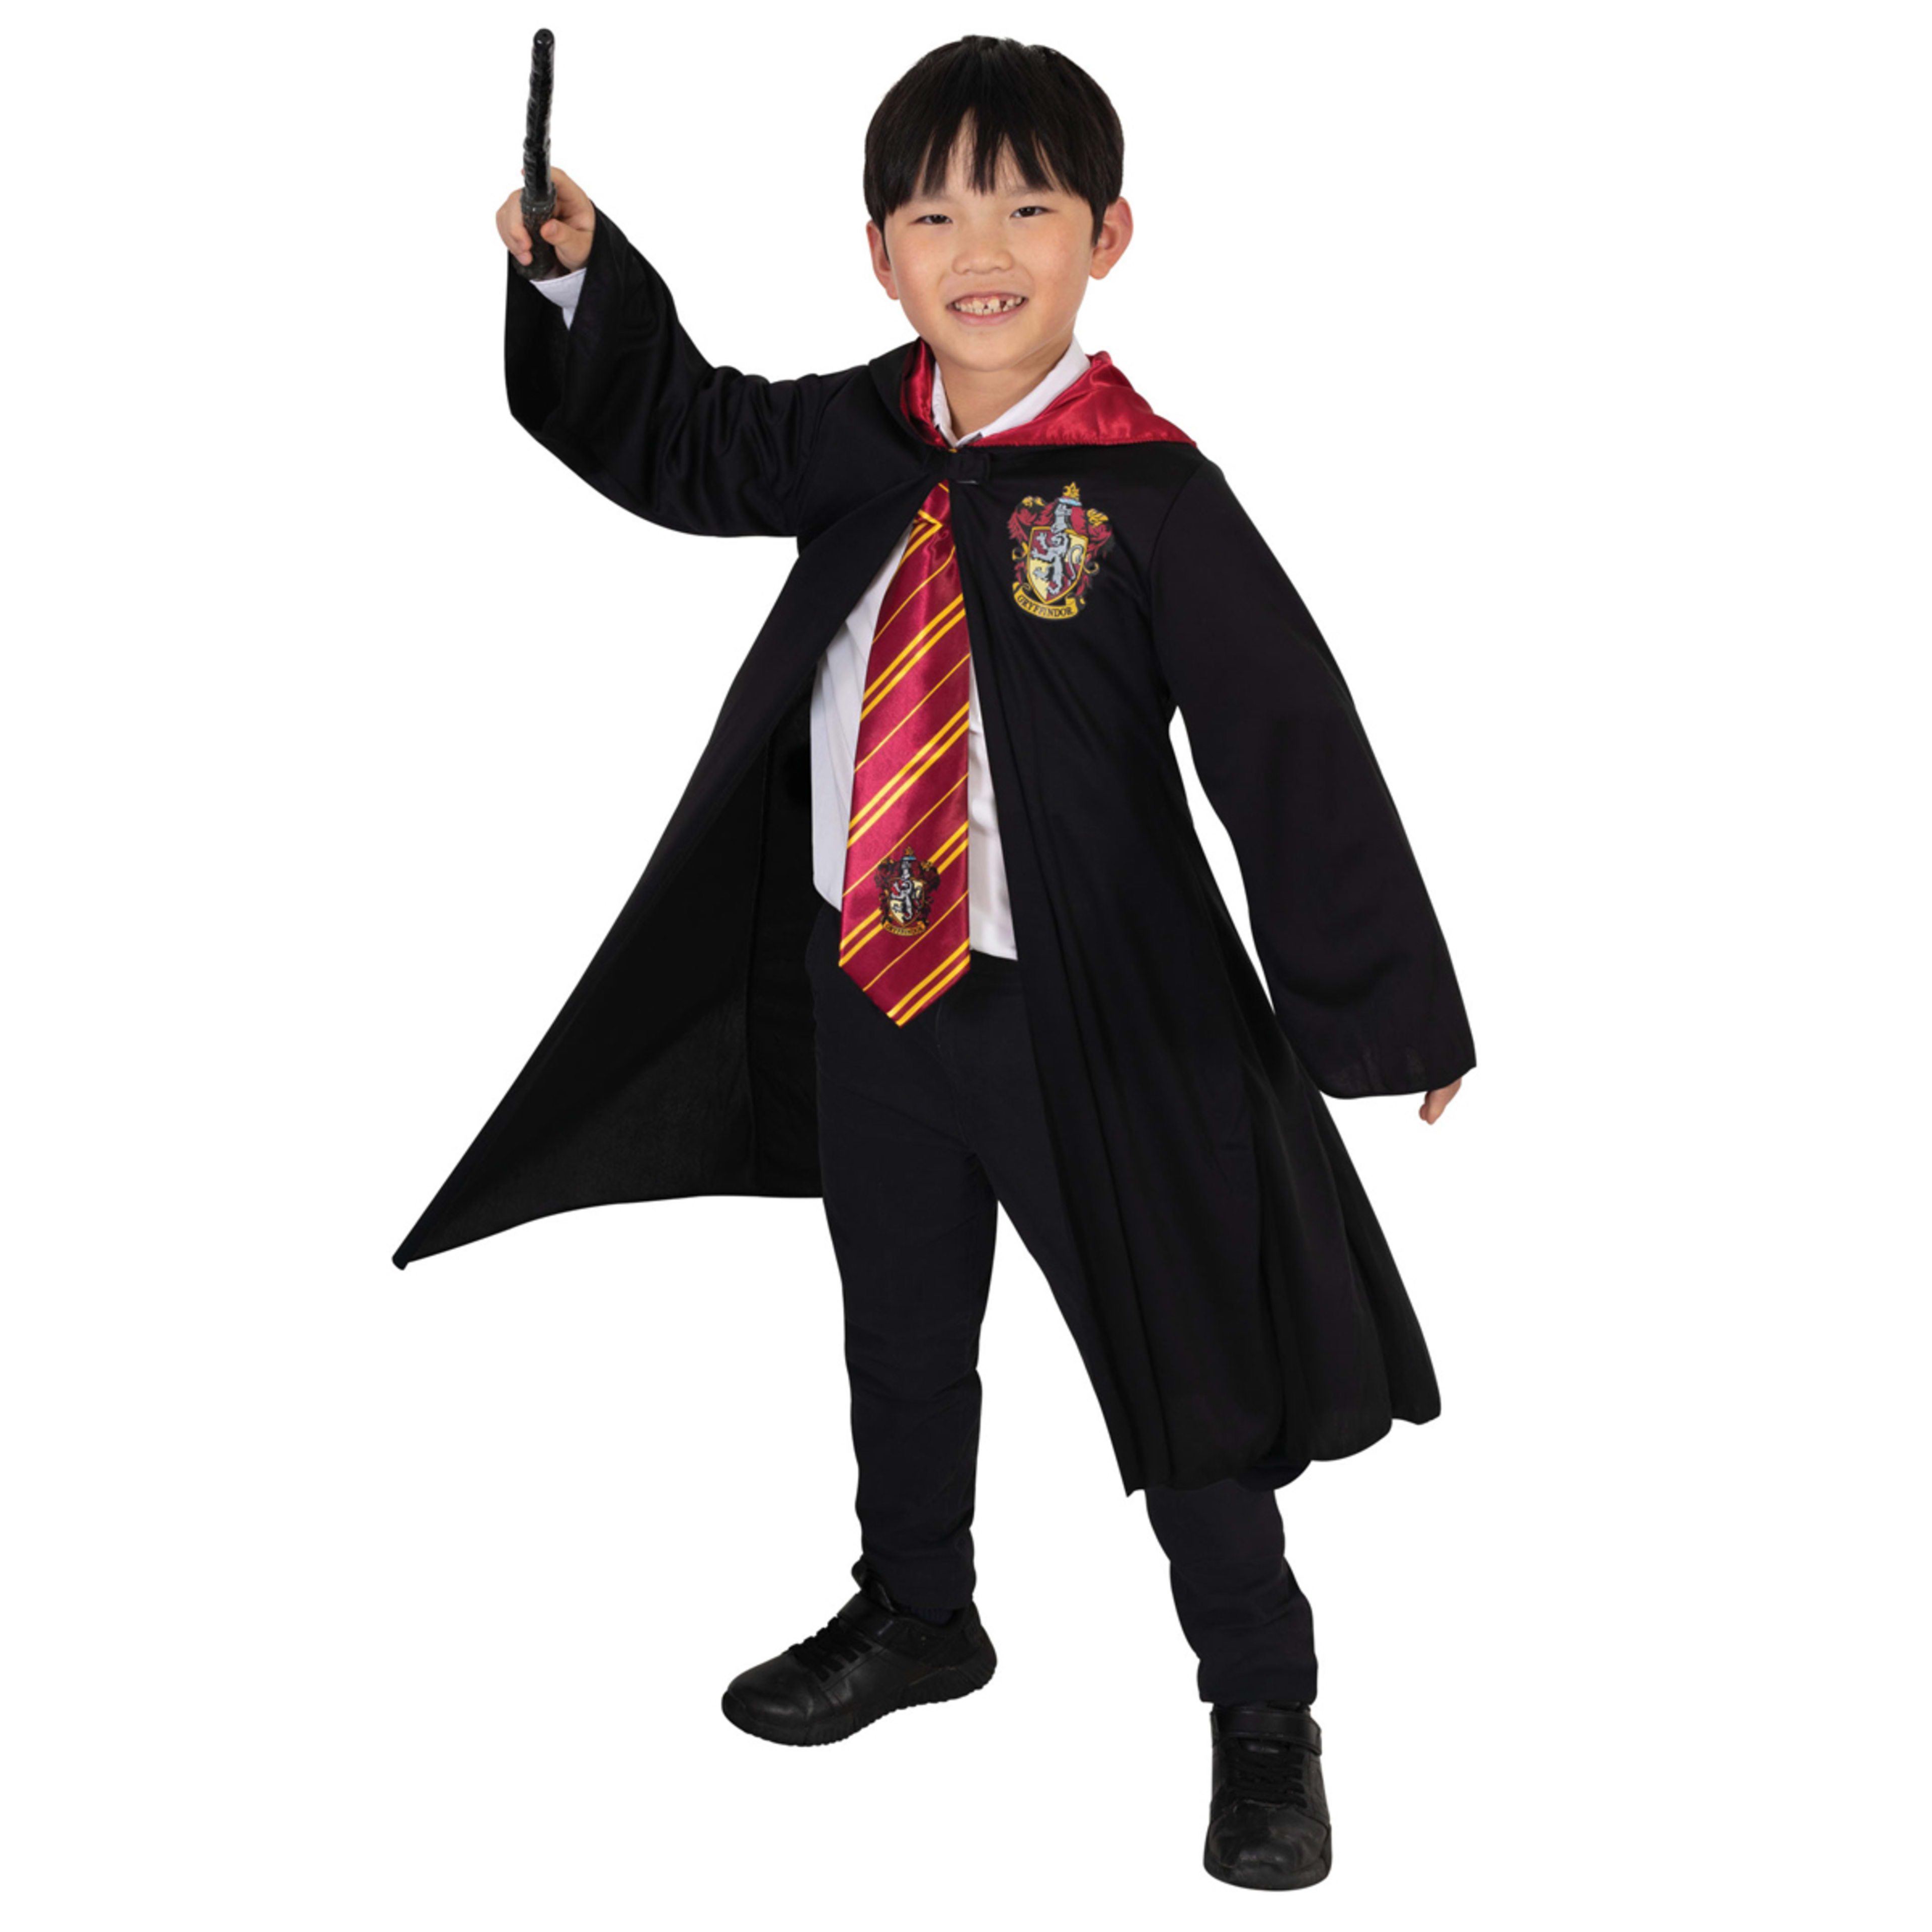 Harry Potter Costume - Age 9 - Kmart